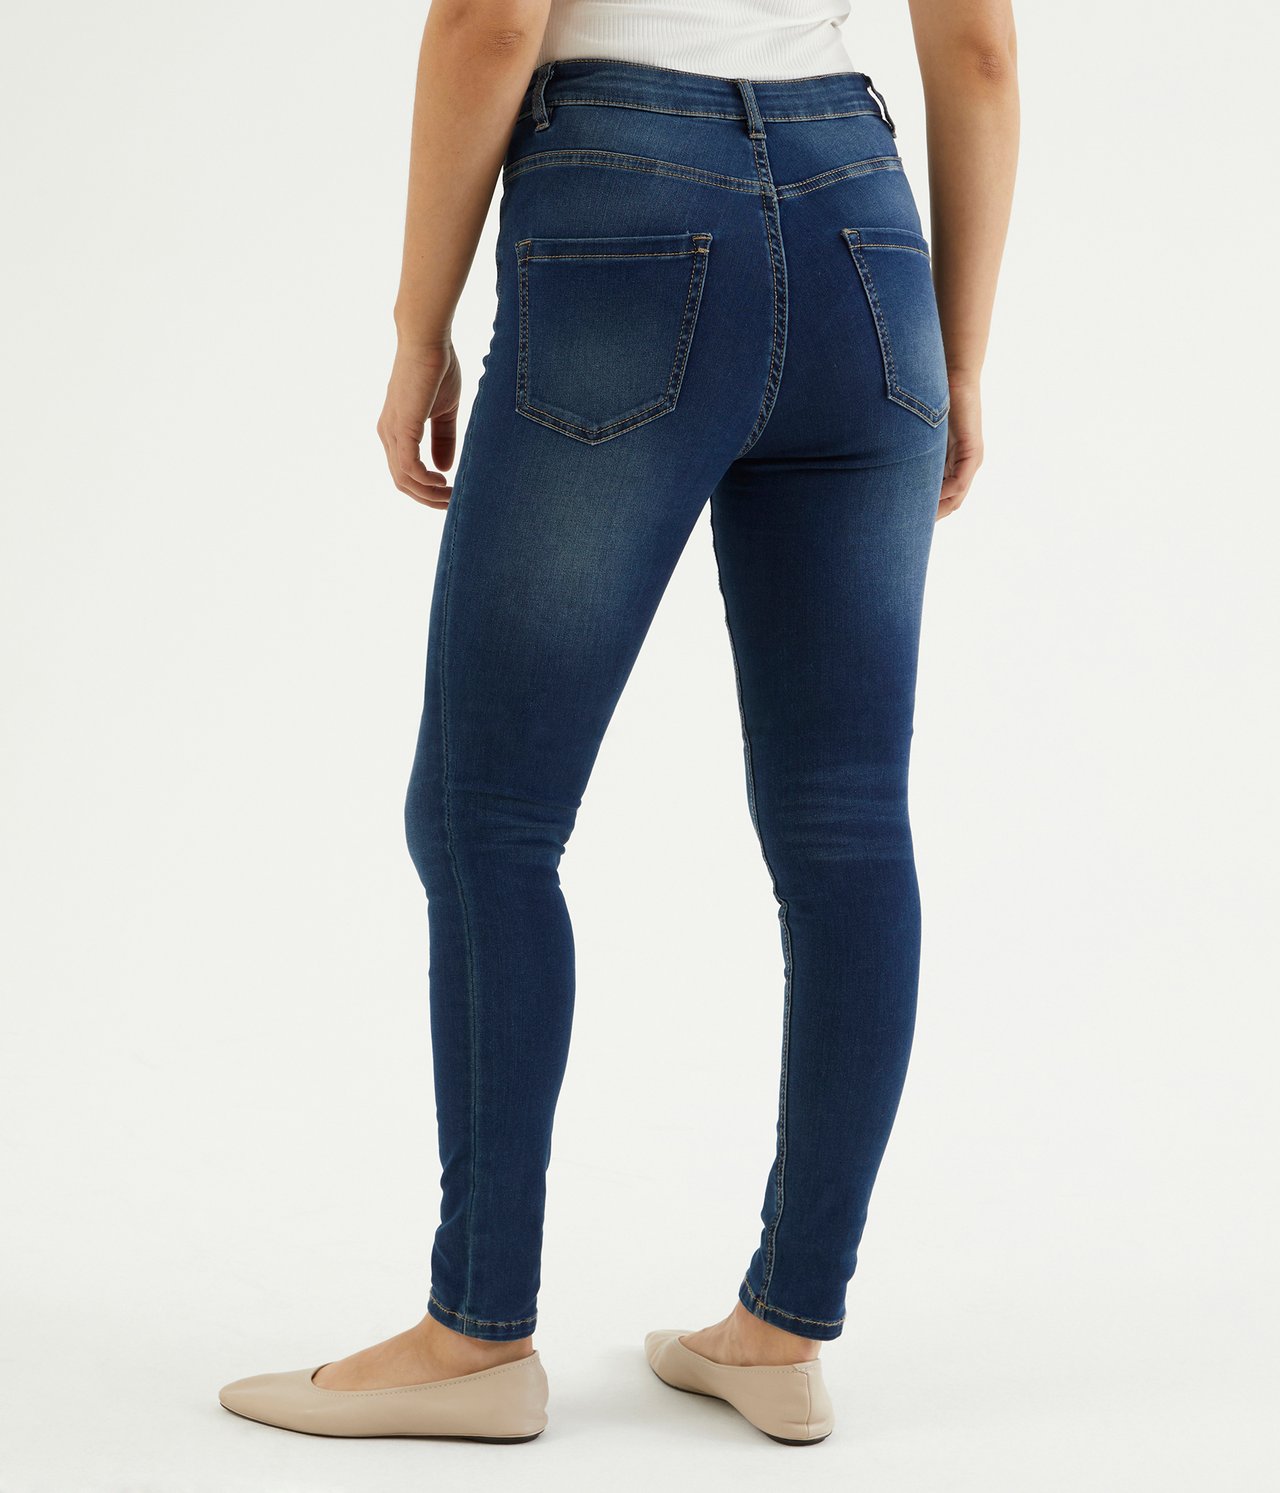 Super Slim Jeans High Waist - Tumma denimi - 174cm / Storlek: 38 - 7